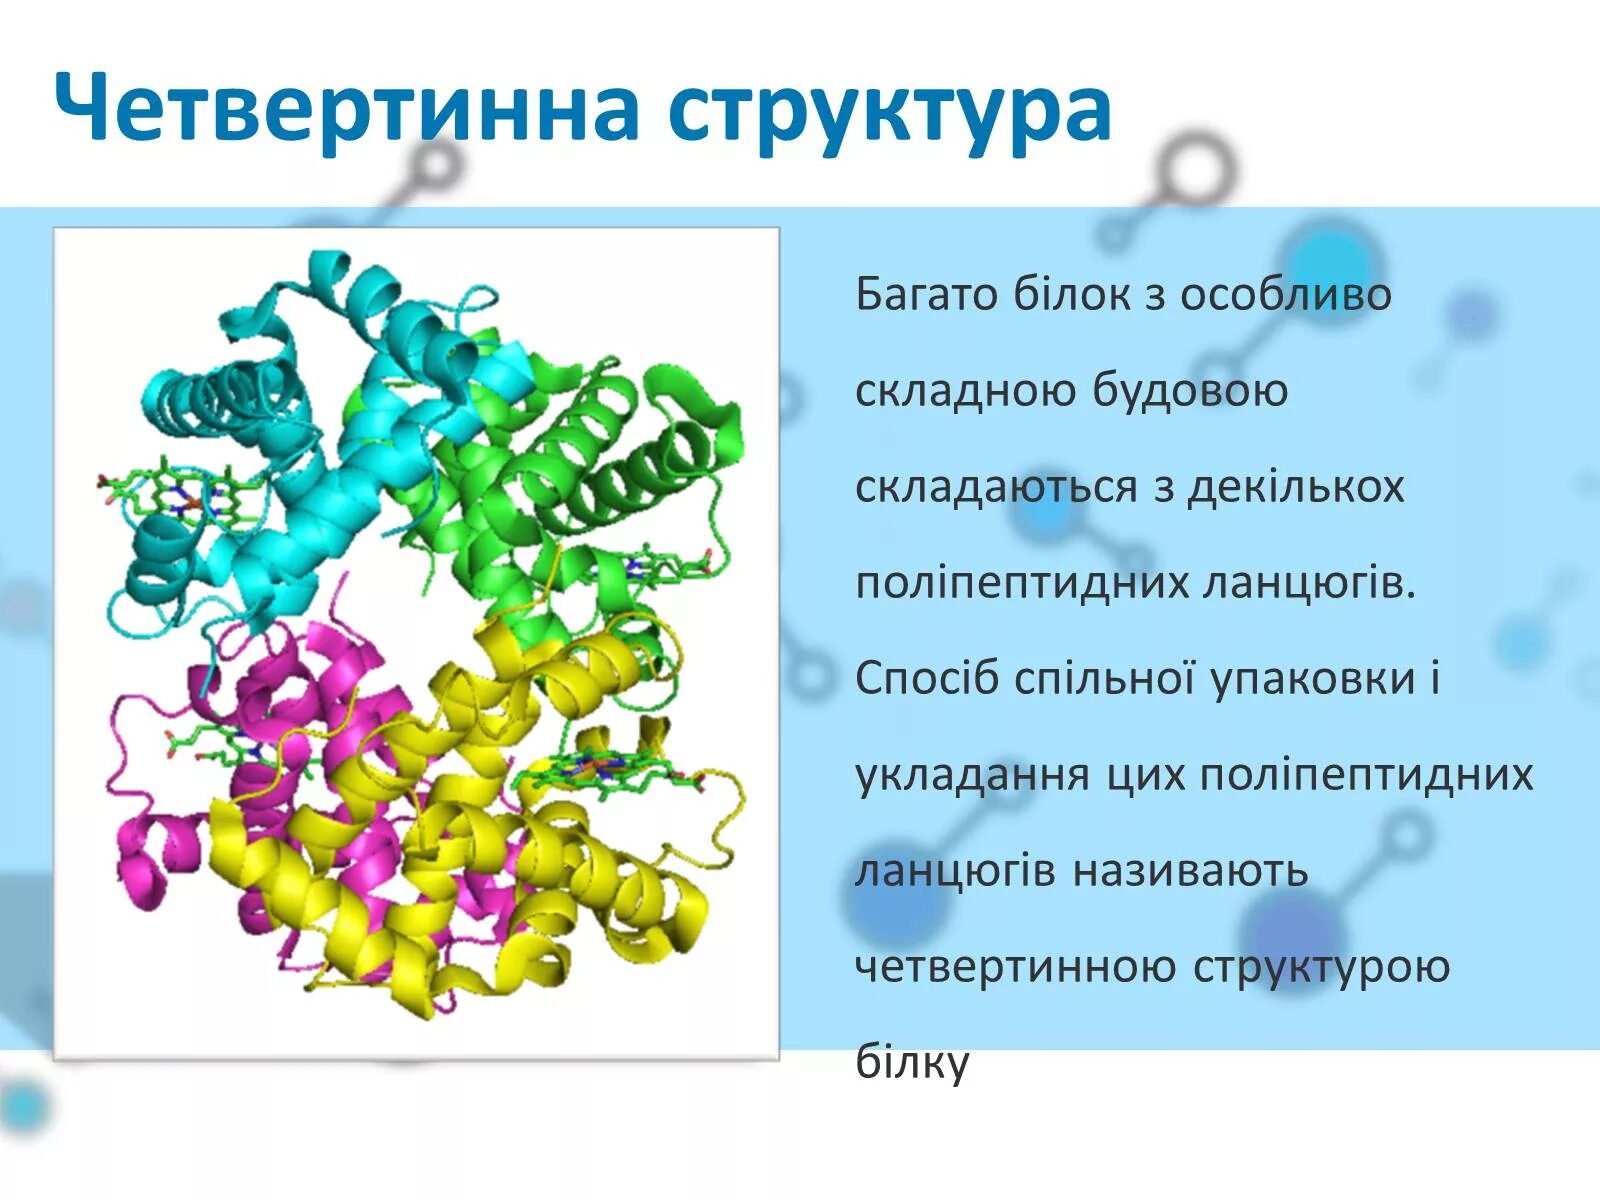 Белок 6 класс биология. Четвертичная структура белка химия. Четвертичная структура белка это структура. Белки химия четвертичная структура. Белок презентация.